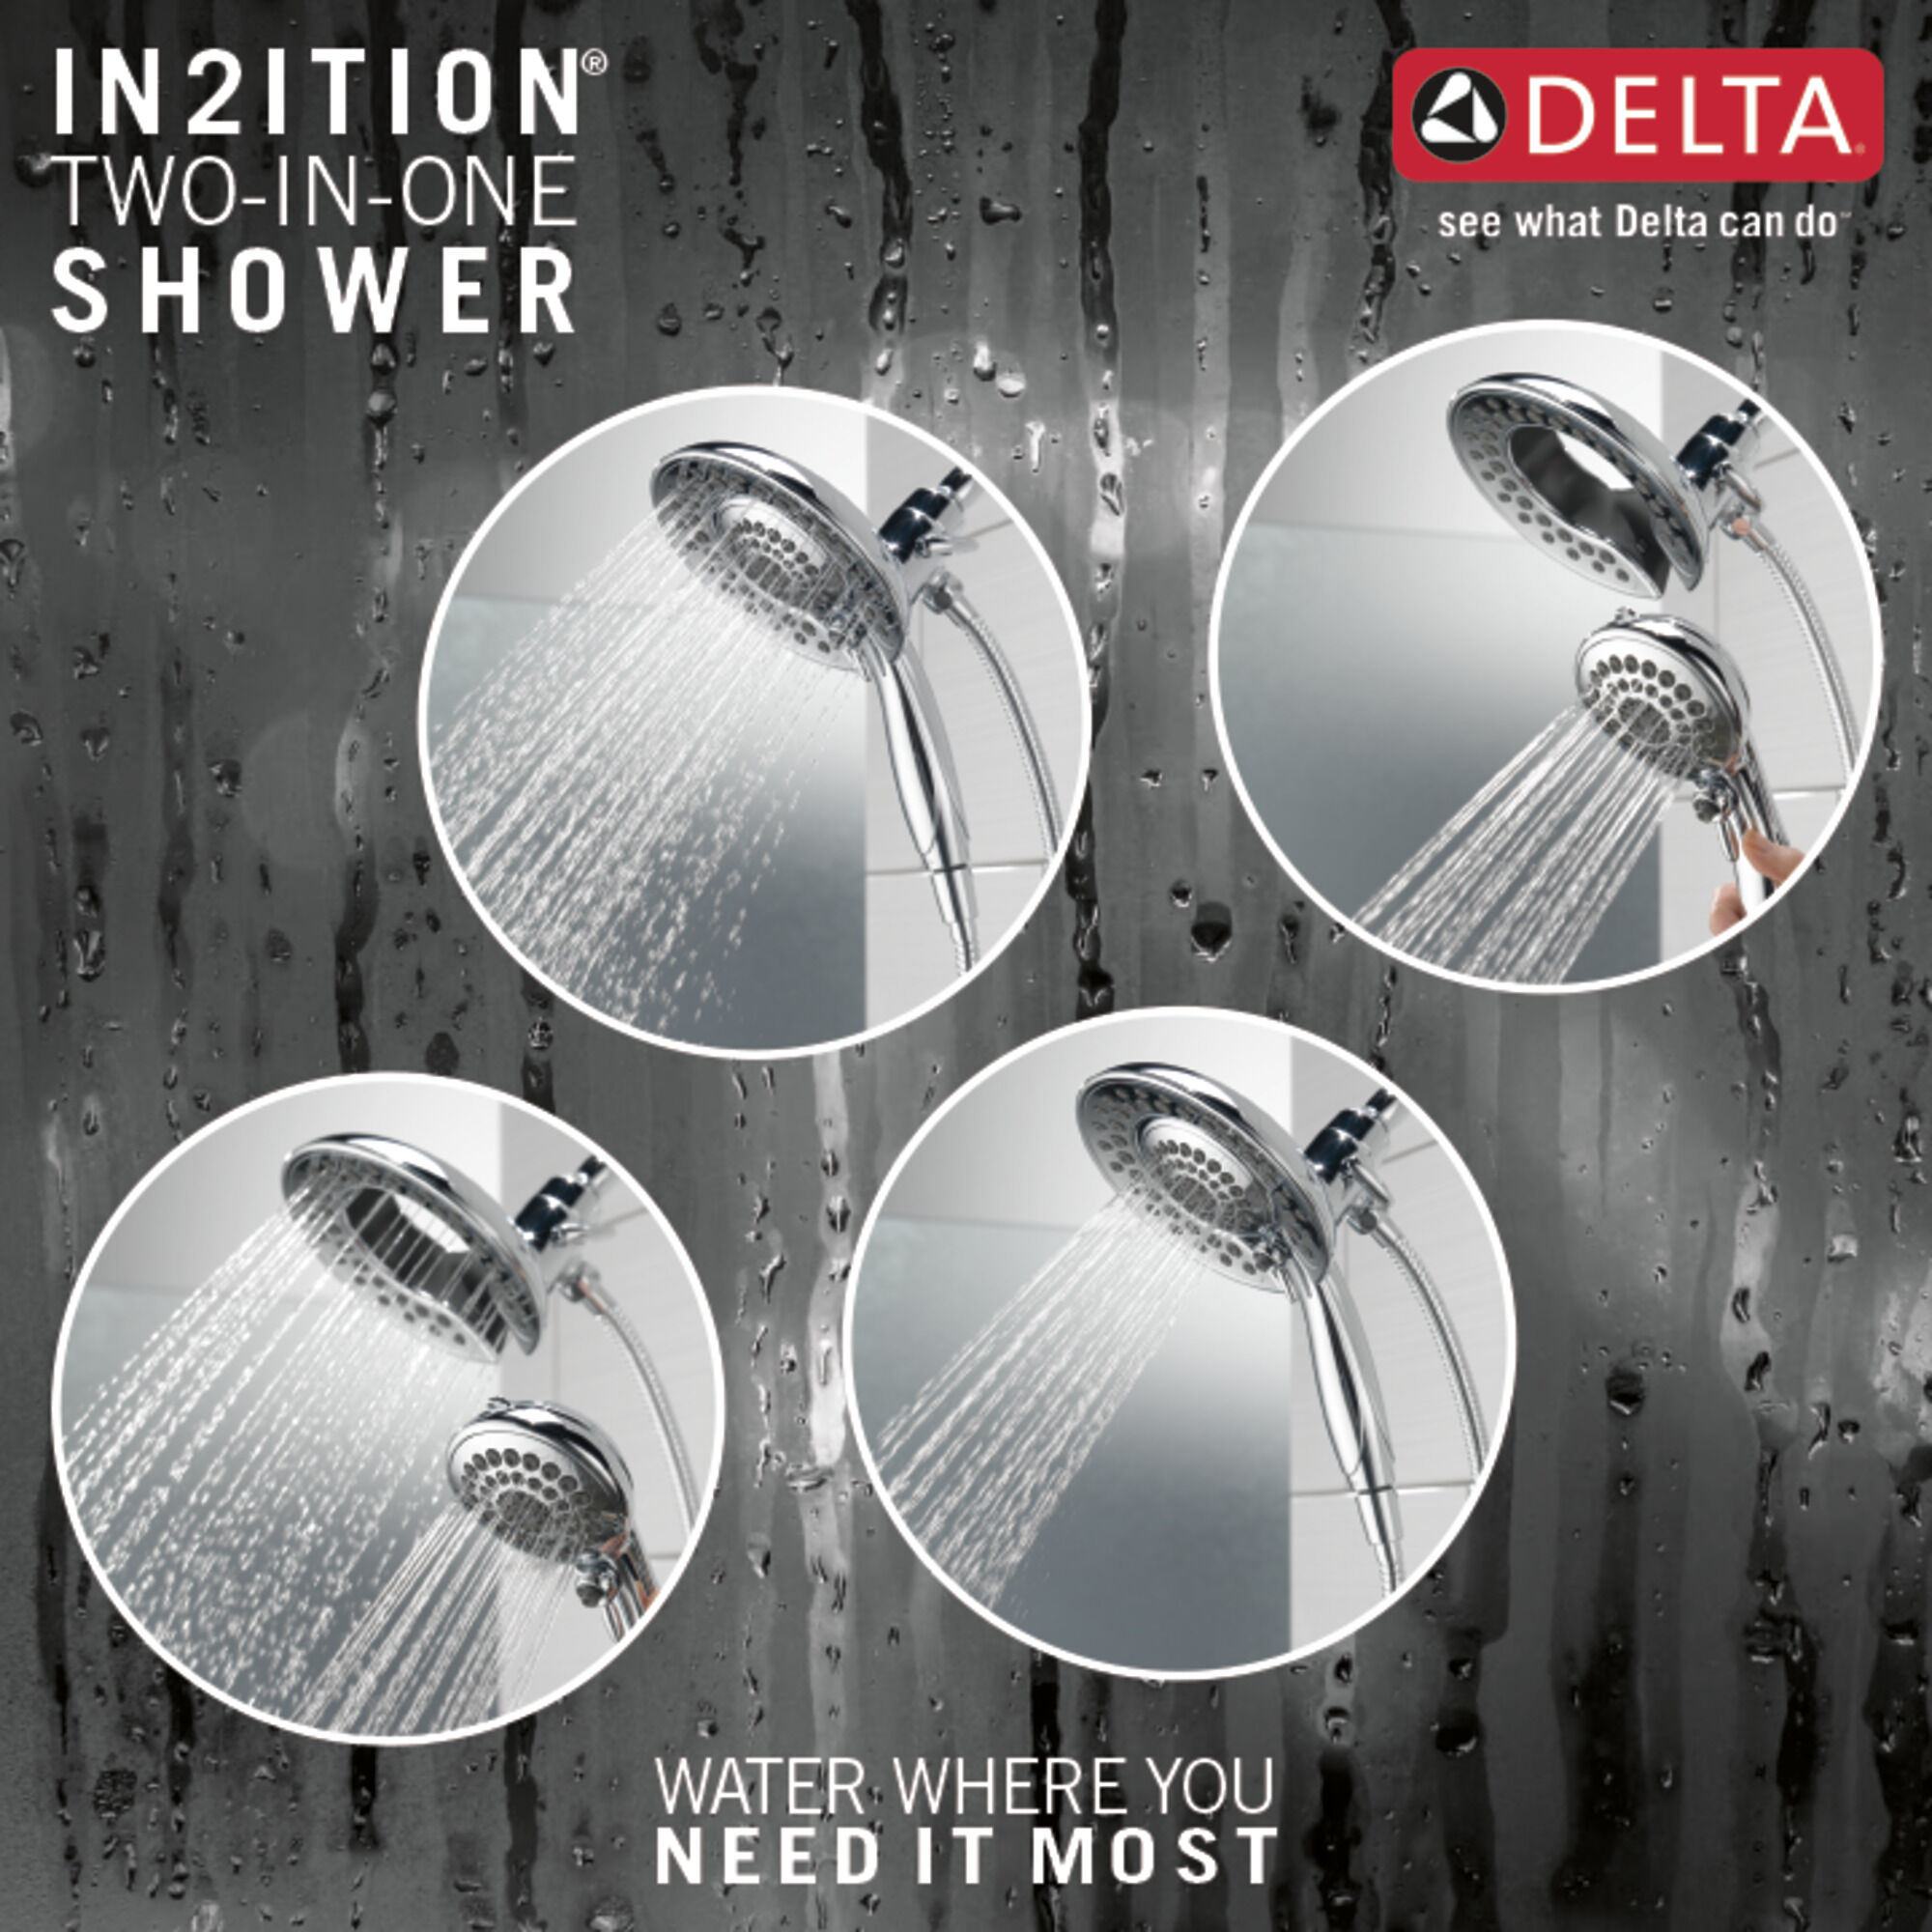 Delta 58569-PK Silver Handheld Shower Head for sale online 